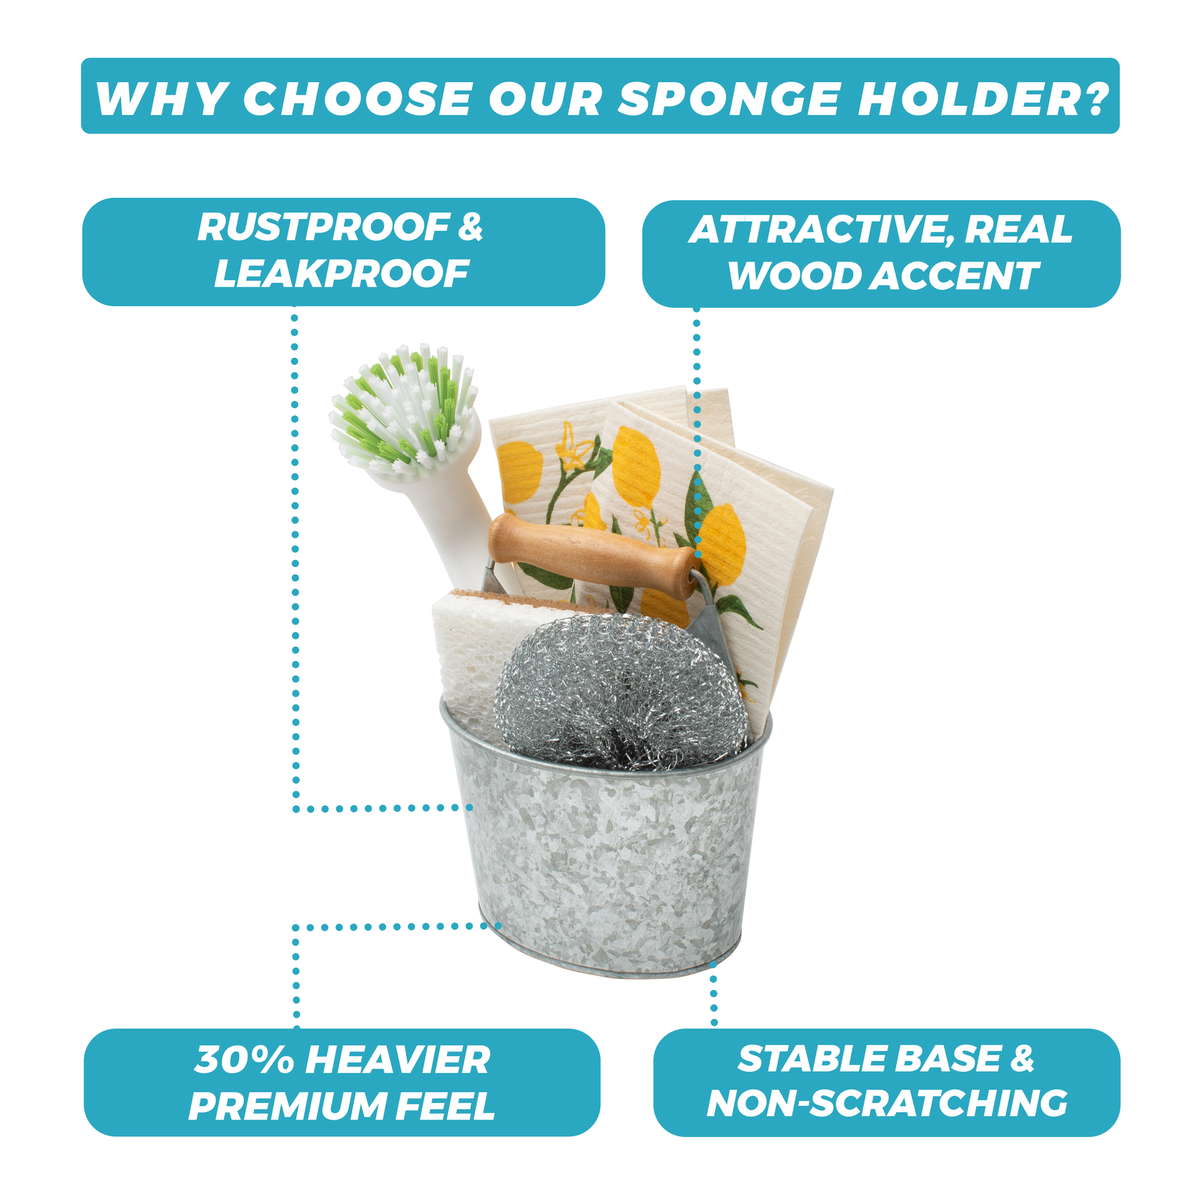 Why choose our sponge holder? Rustproof and leakproof sponge holder with dishwashing supplies